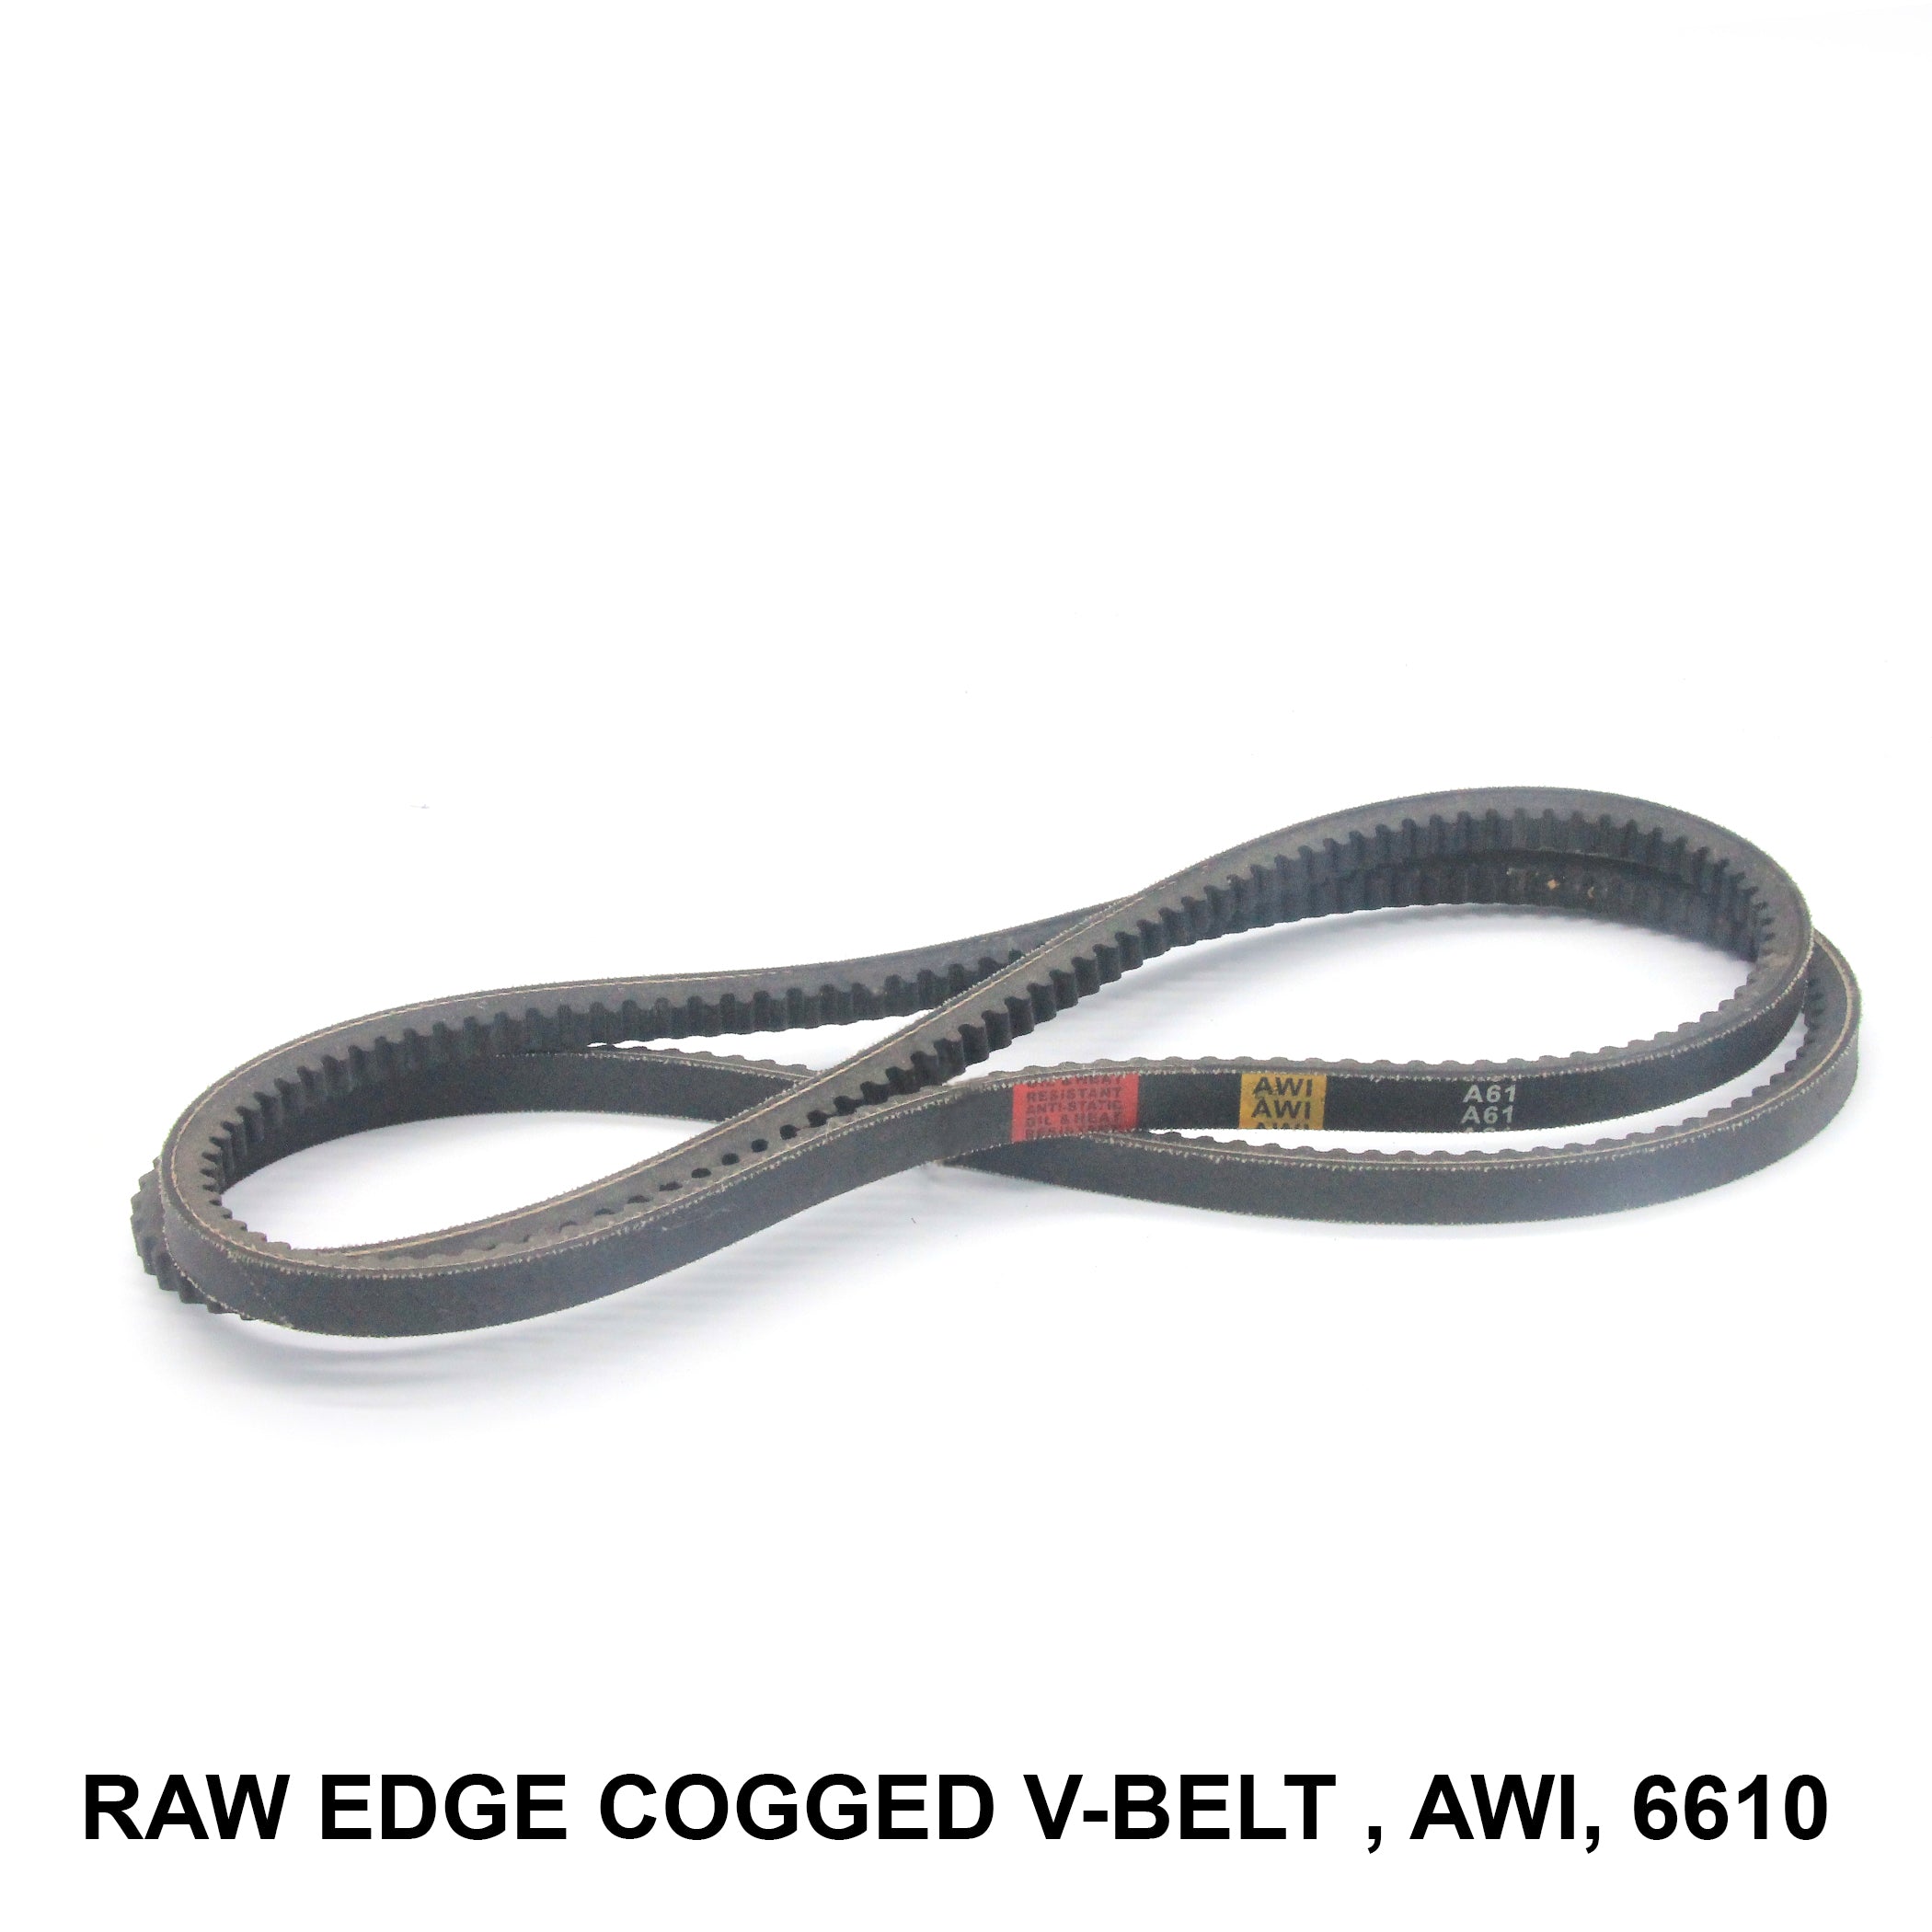 Raw Edge Cogged V-belt with AWI, RECMF-6610